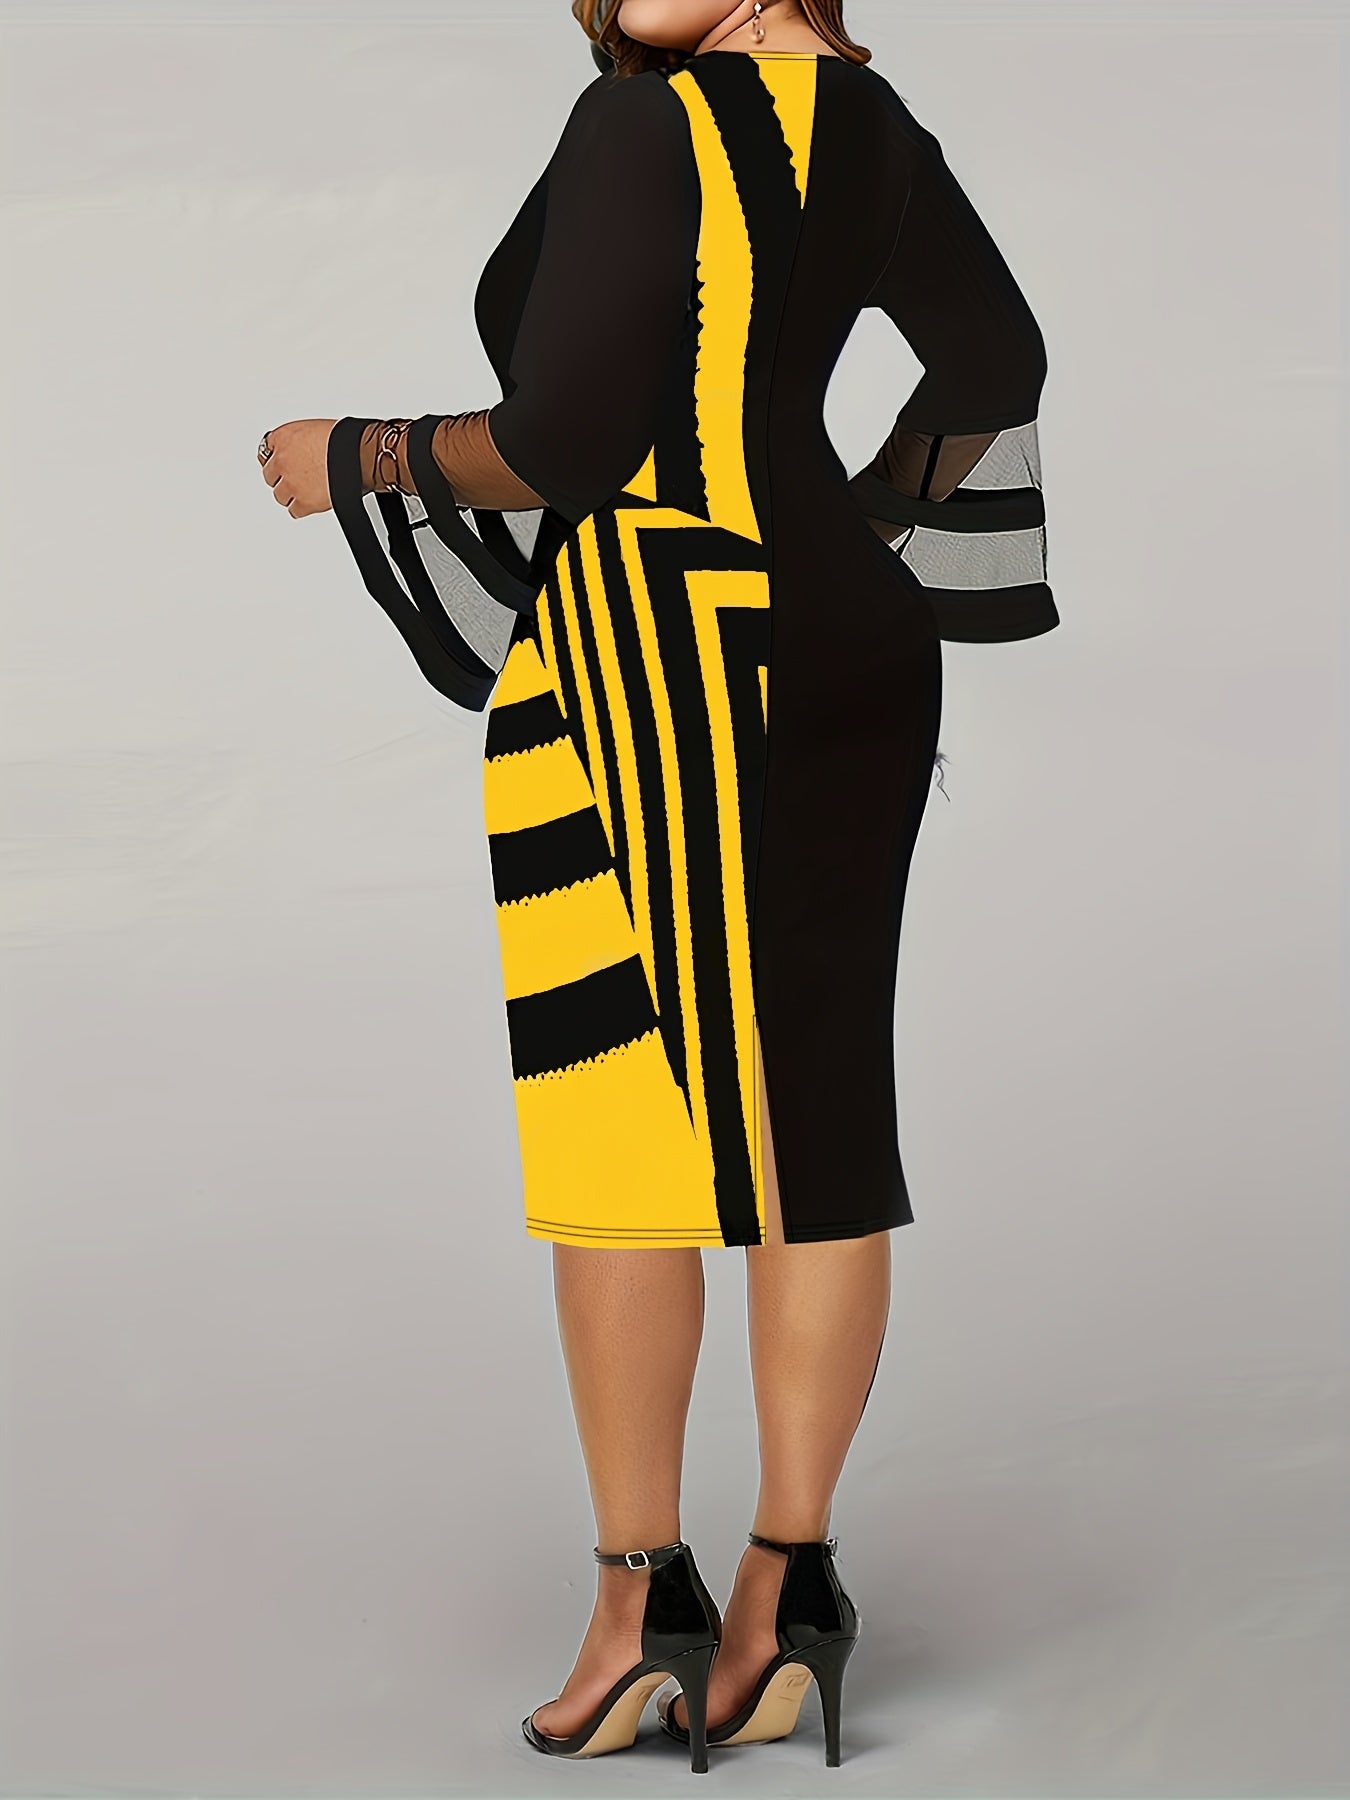 Antmvs Plus Size Casual Party Dress, Women's Plus Colorblock Stripe Print Contrast Mesh Bell Sleeve V Neck Medium Stretch Midi Slim Fit Dress